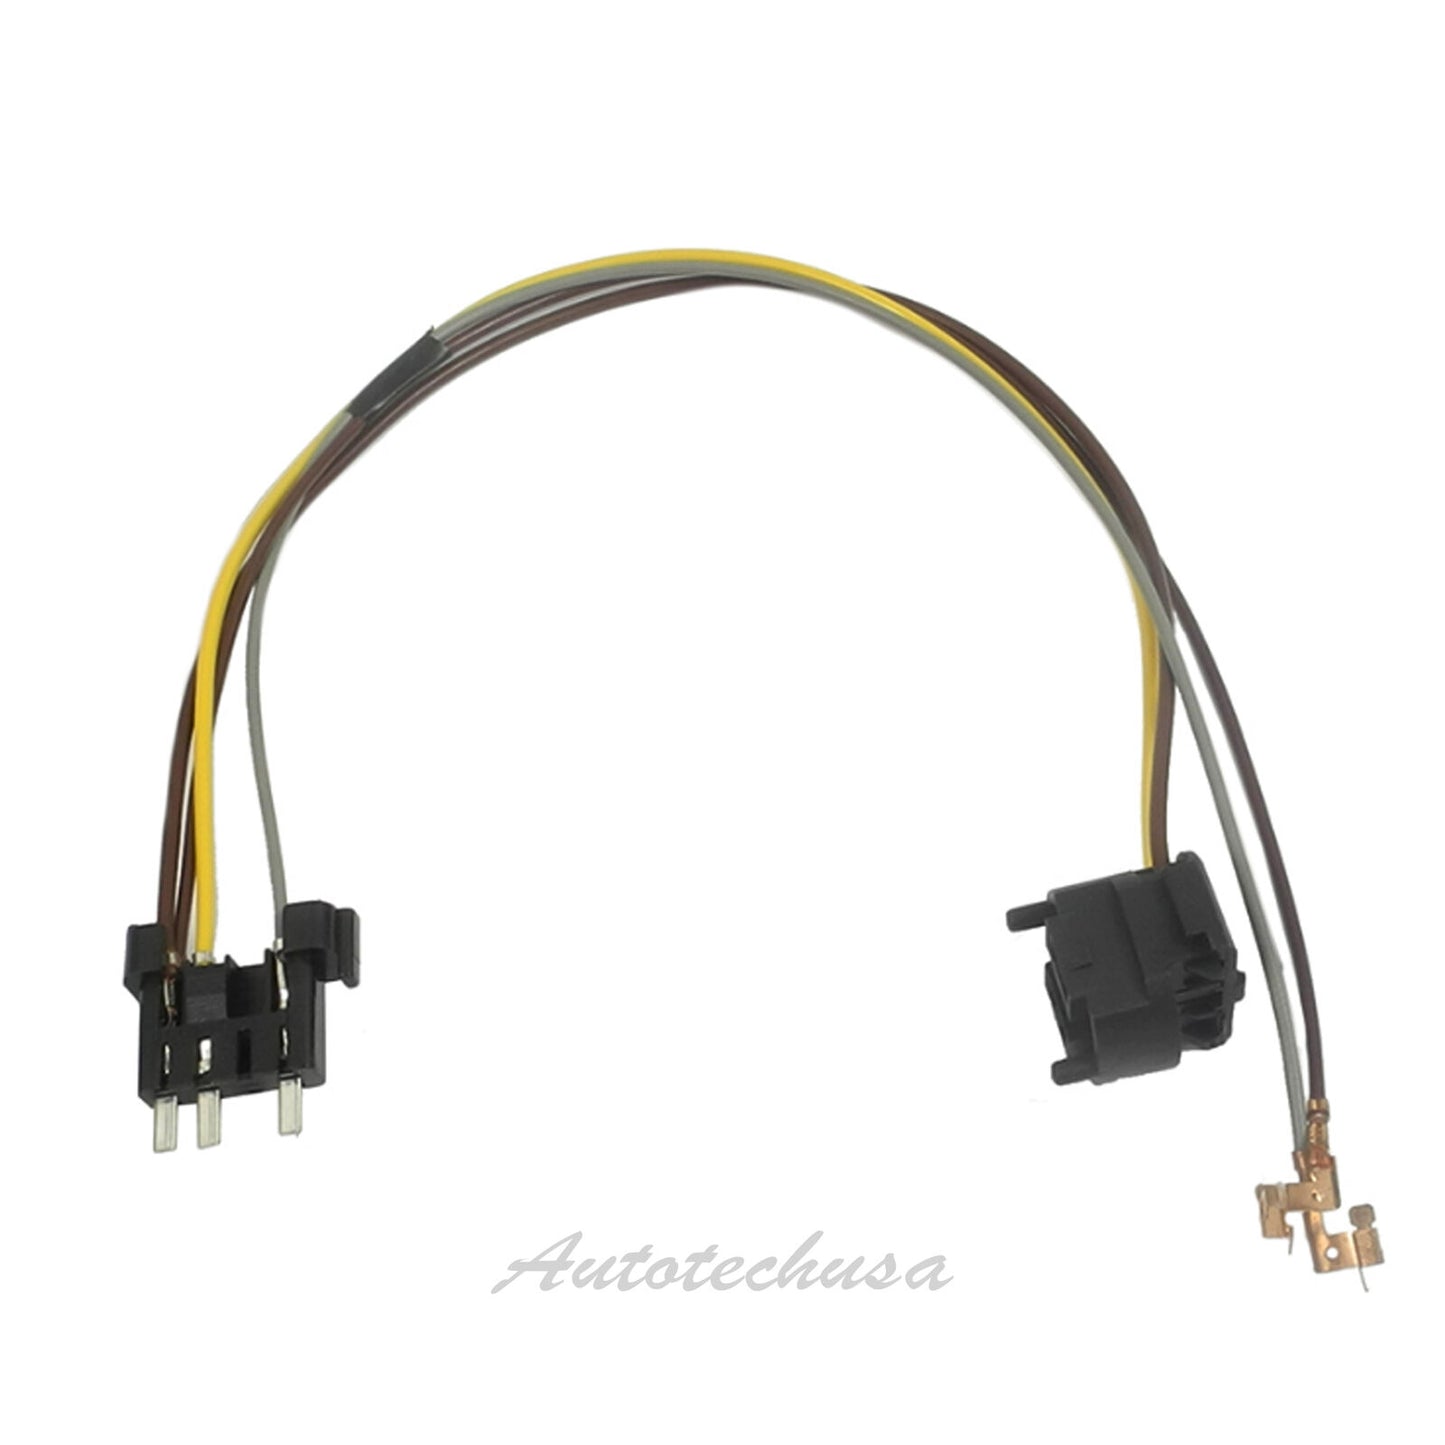 For Left Headlight Wiring Harness Repair Kit D123L W221 E280 E300 E320 E350 E55